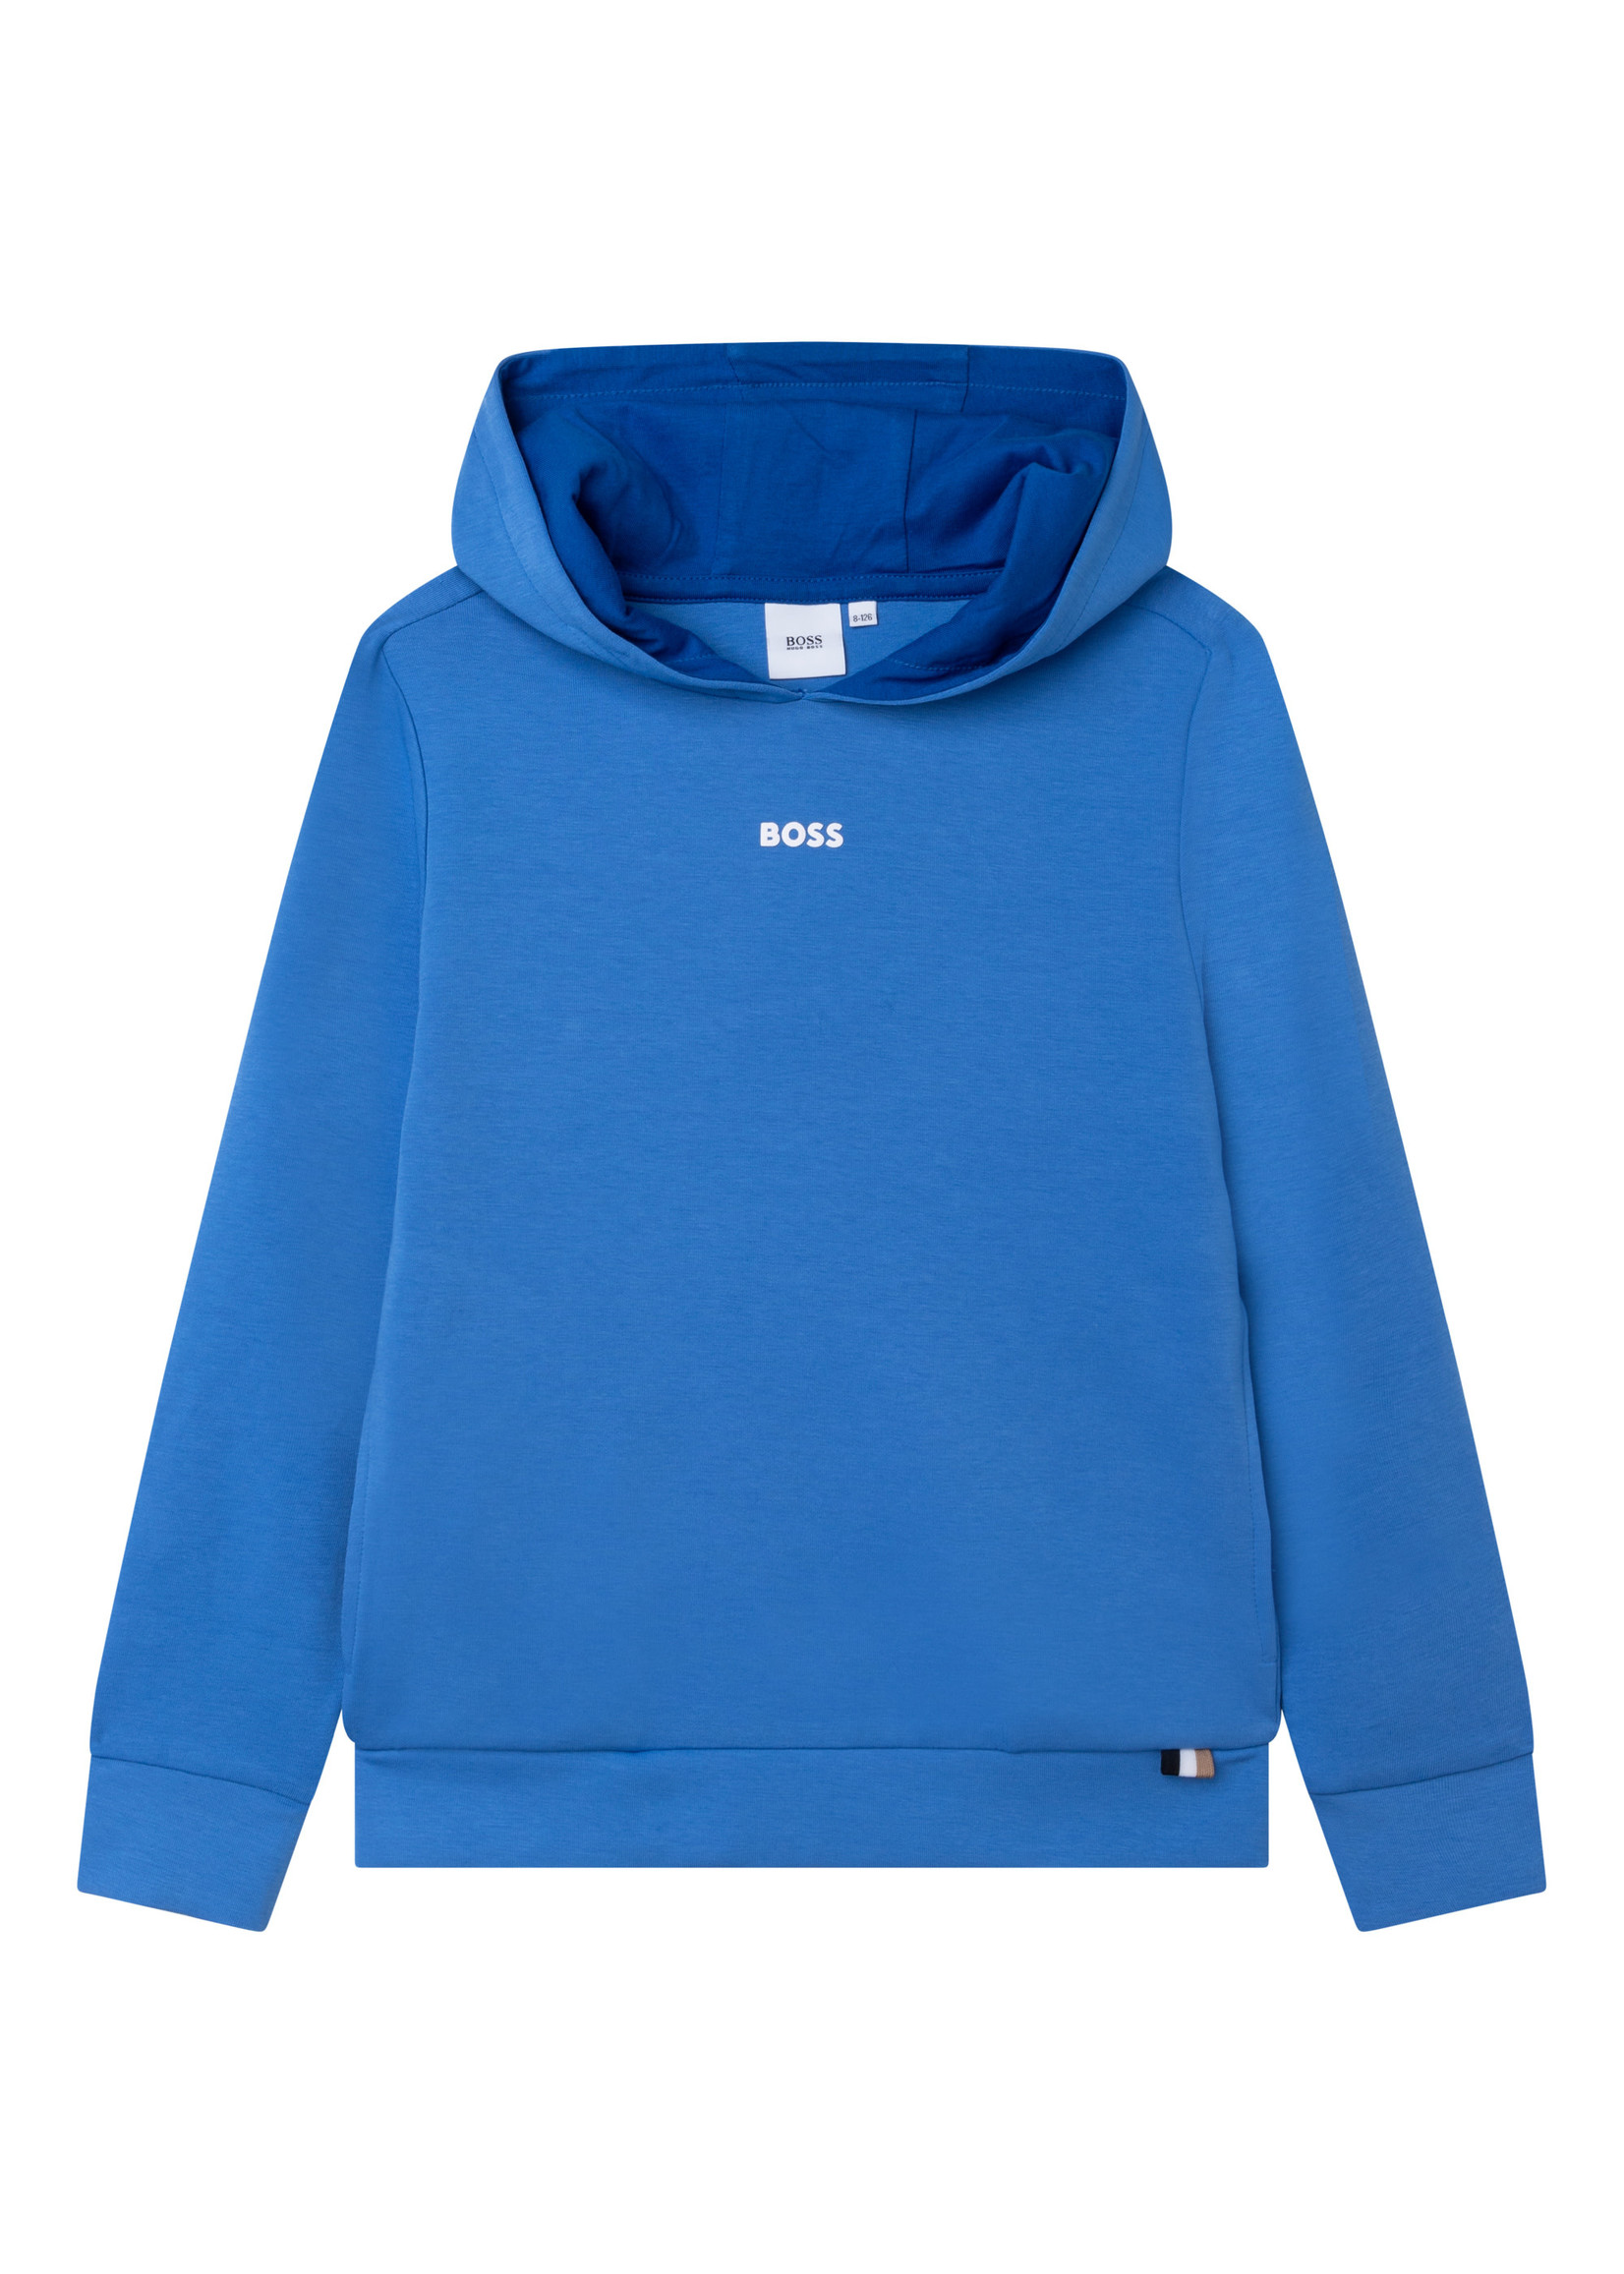 BOSS BOSS Boy hoodie blue - J25N73